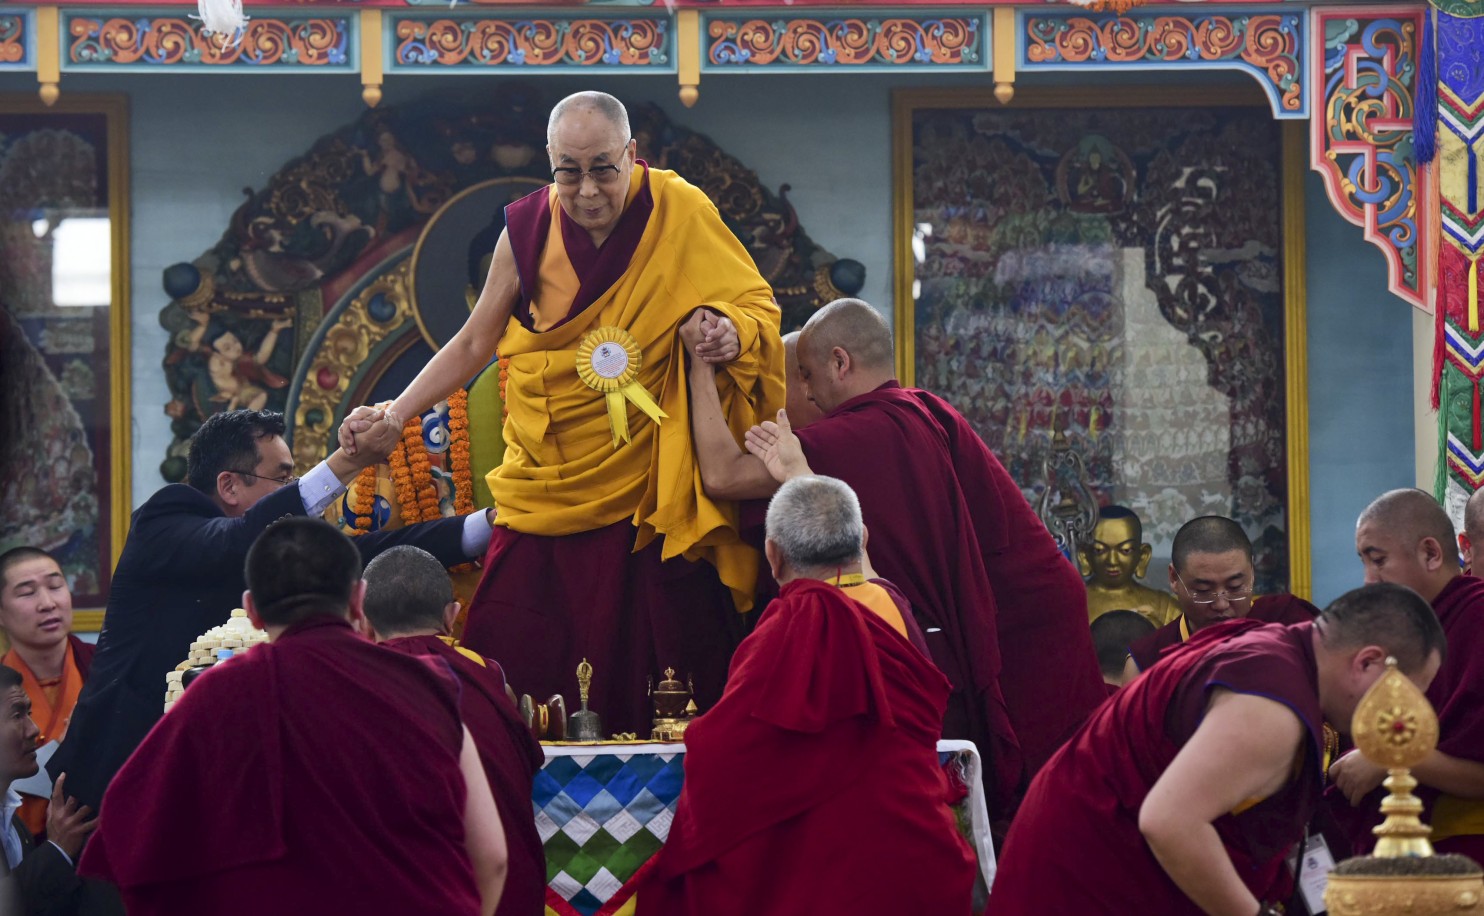 Tibetan spiritual leader the Dalai Lama is assisted by his aides as he prepares to perform rituals during the inauguration of a Mongolian Buddhist temple in Bodh Gaya, India, Jan. 9, 2017. (AP Photo/Manish Bhandari)